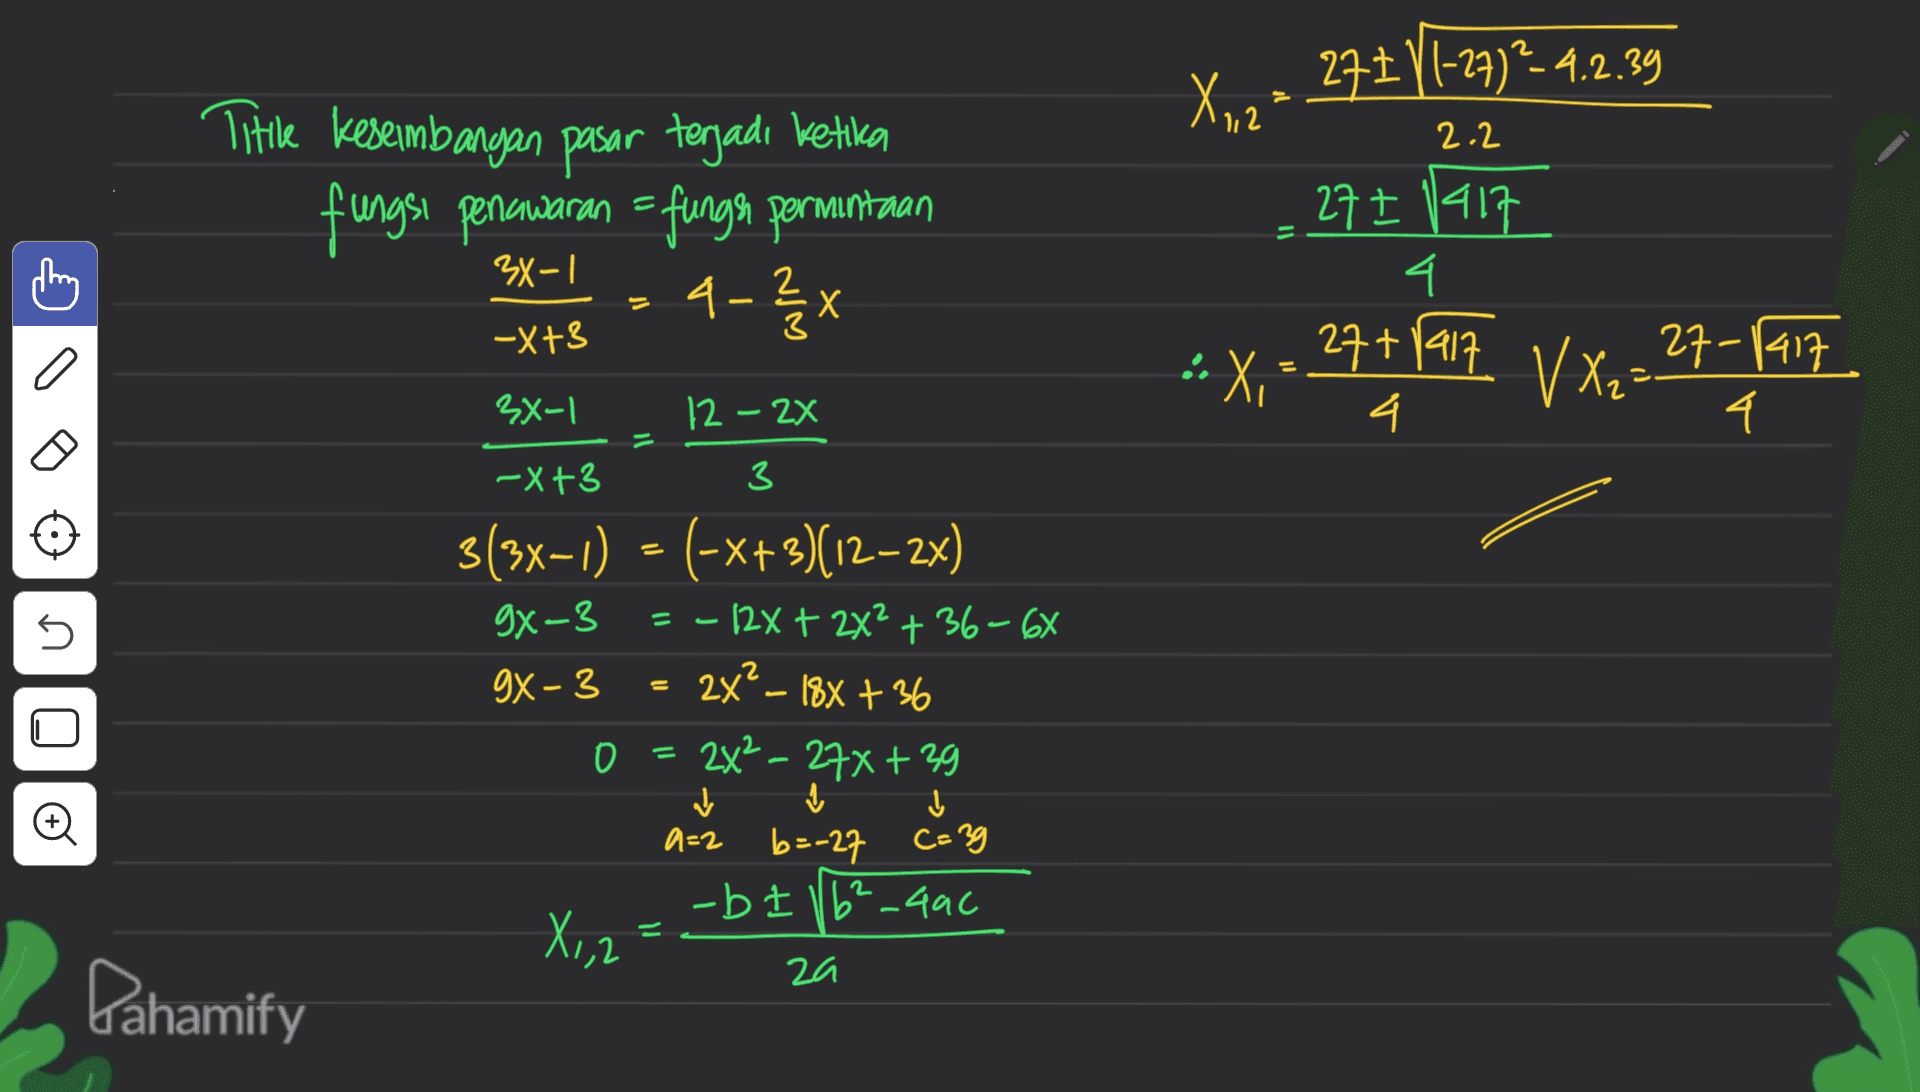 X,12% 273 VI-27) -4.2.39 2.2 Title Keseimbangan pasar tegadi ketika fungsi penawaran = funger permintaan 27 I 1417 4 3X-1 4-2X -X+3 - • X, 27+1917 V X₂=27-ranz 4 4 11 n 3x-1 12 - 2x -X+3 3 3(3x-1) = (-x+3)(12-2x) 9x-3 = - 12x + 2x2 + 36-67 gX-3 O = 2x2 - 27x + 39 0 + 1 I a=2 b=-27 b=-27 C=39 -bt 16²_446 X1,2 za 11 2x² - 188 +36 Q0 ✓ a= 2 Pahamify 